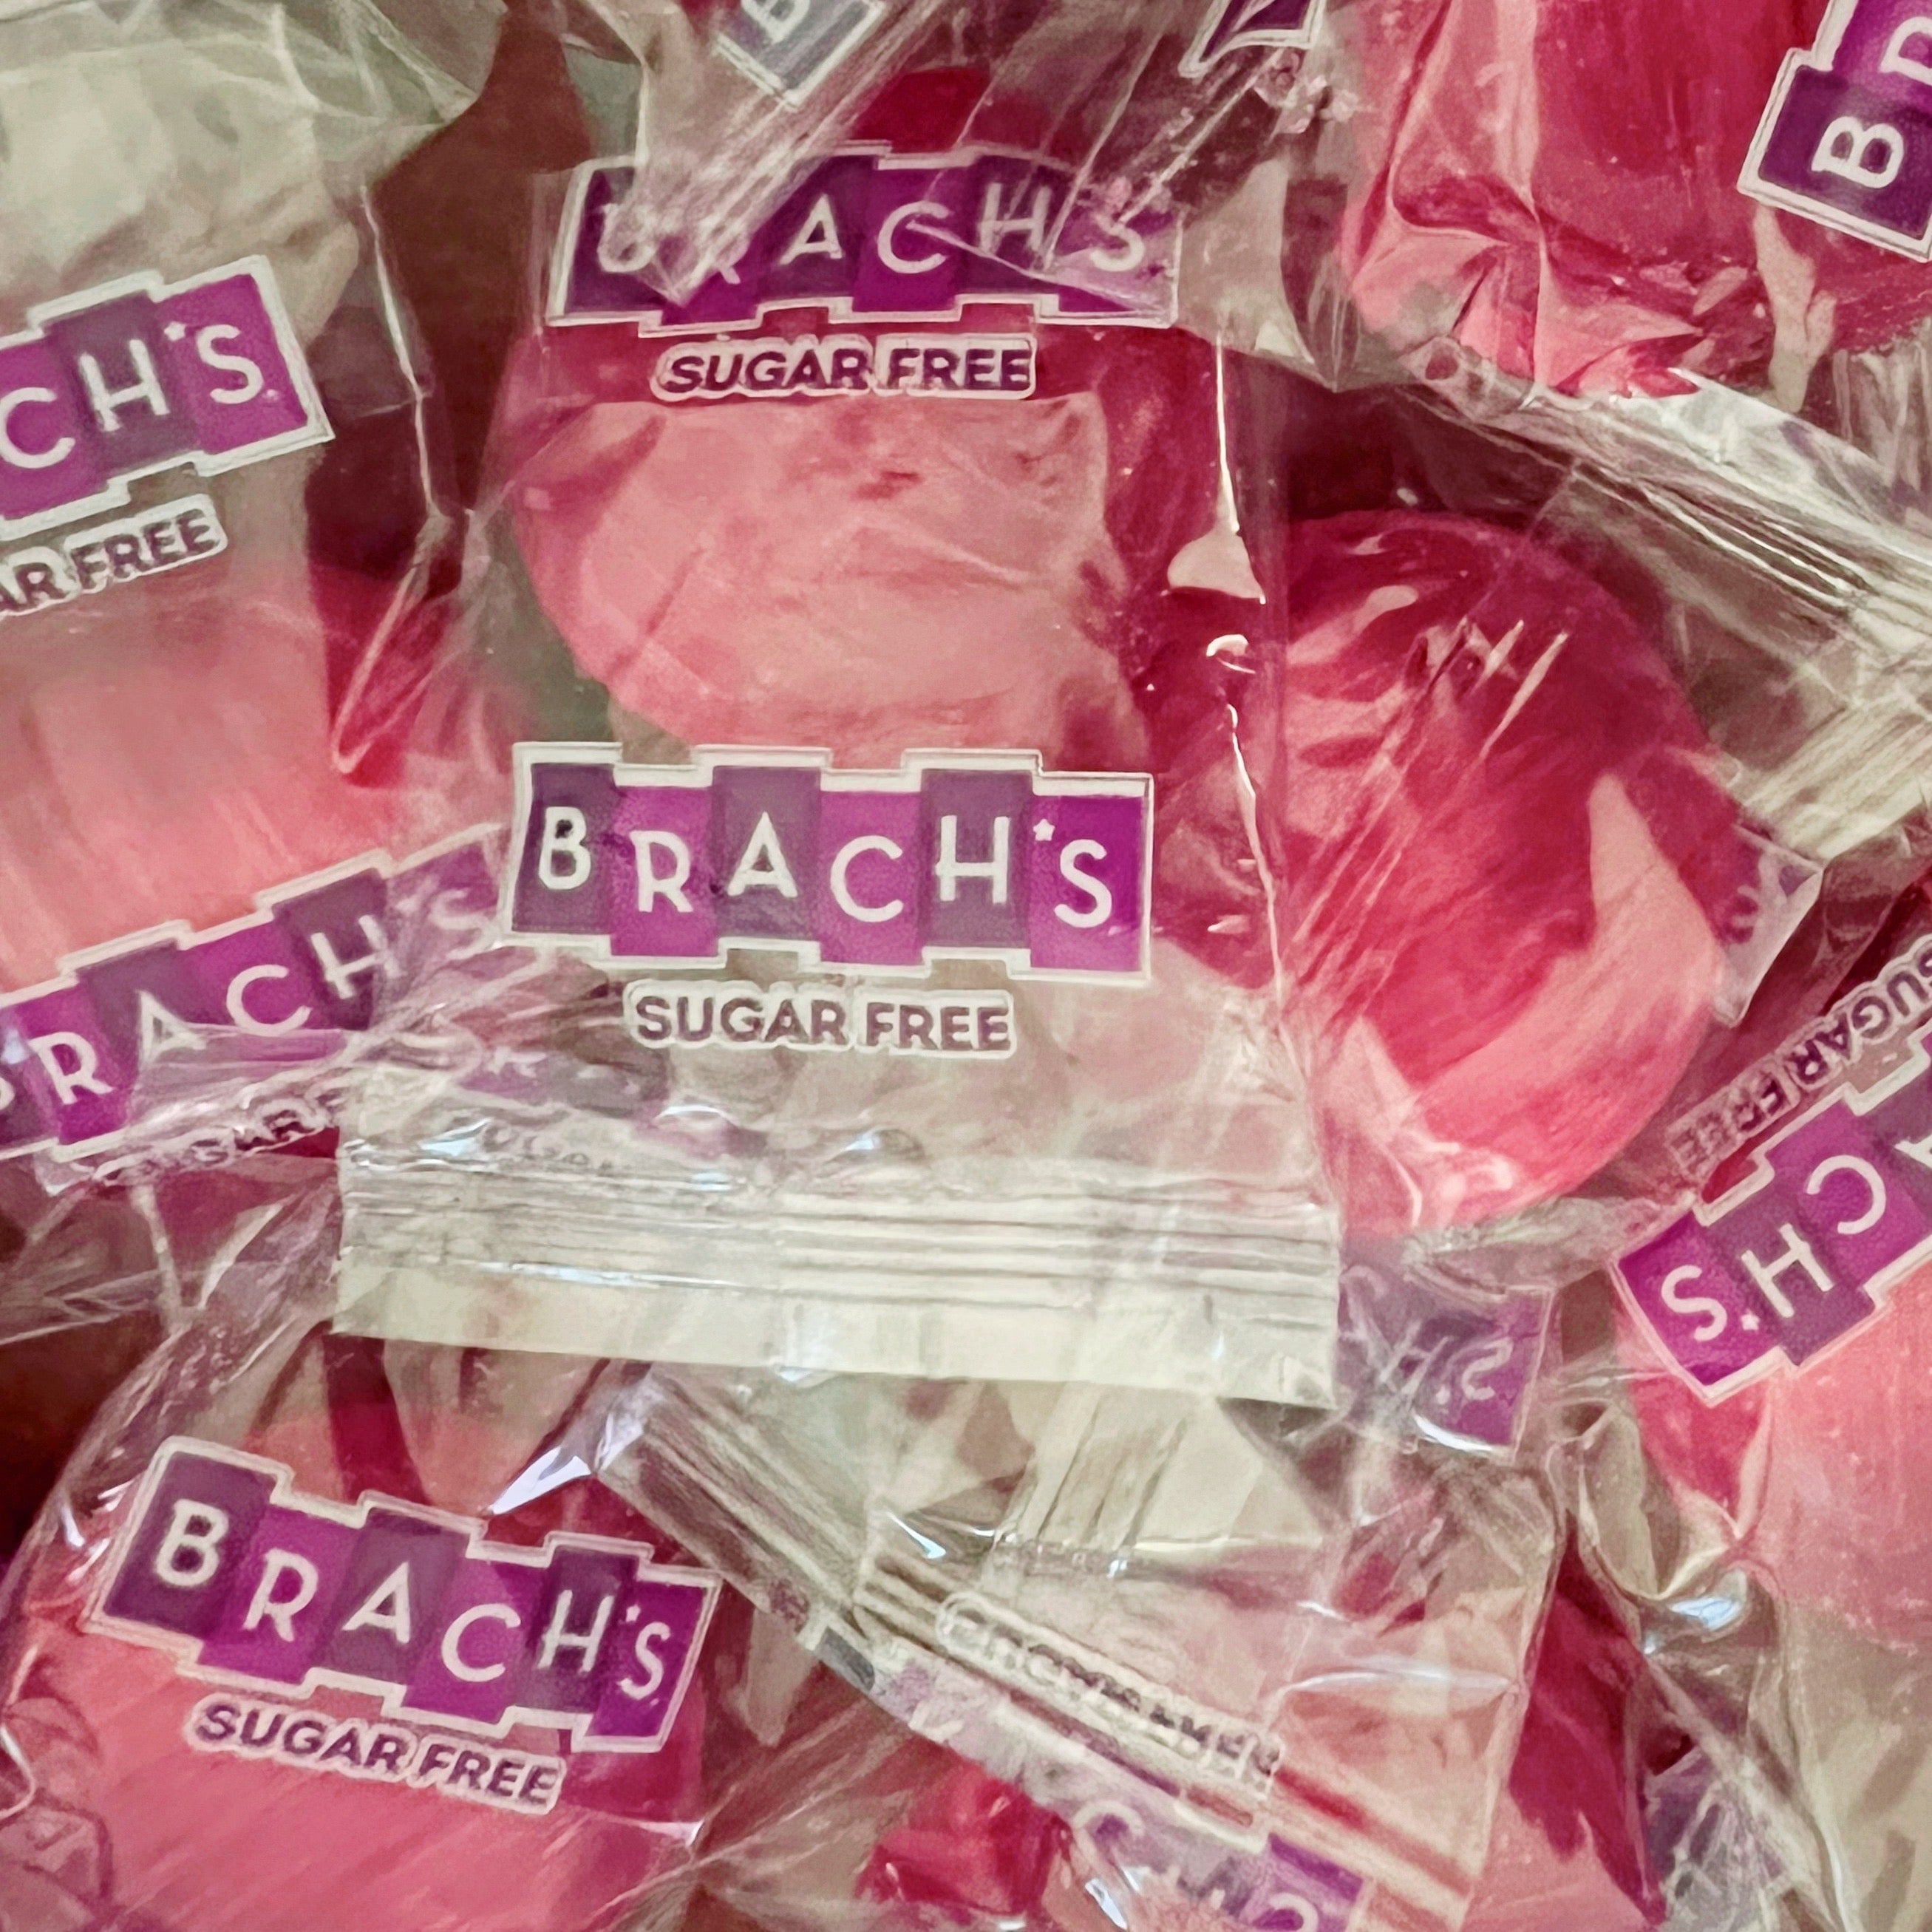 Brach's Cinnamon hard candies – Keto Candy Jar